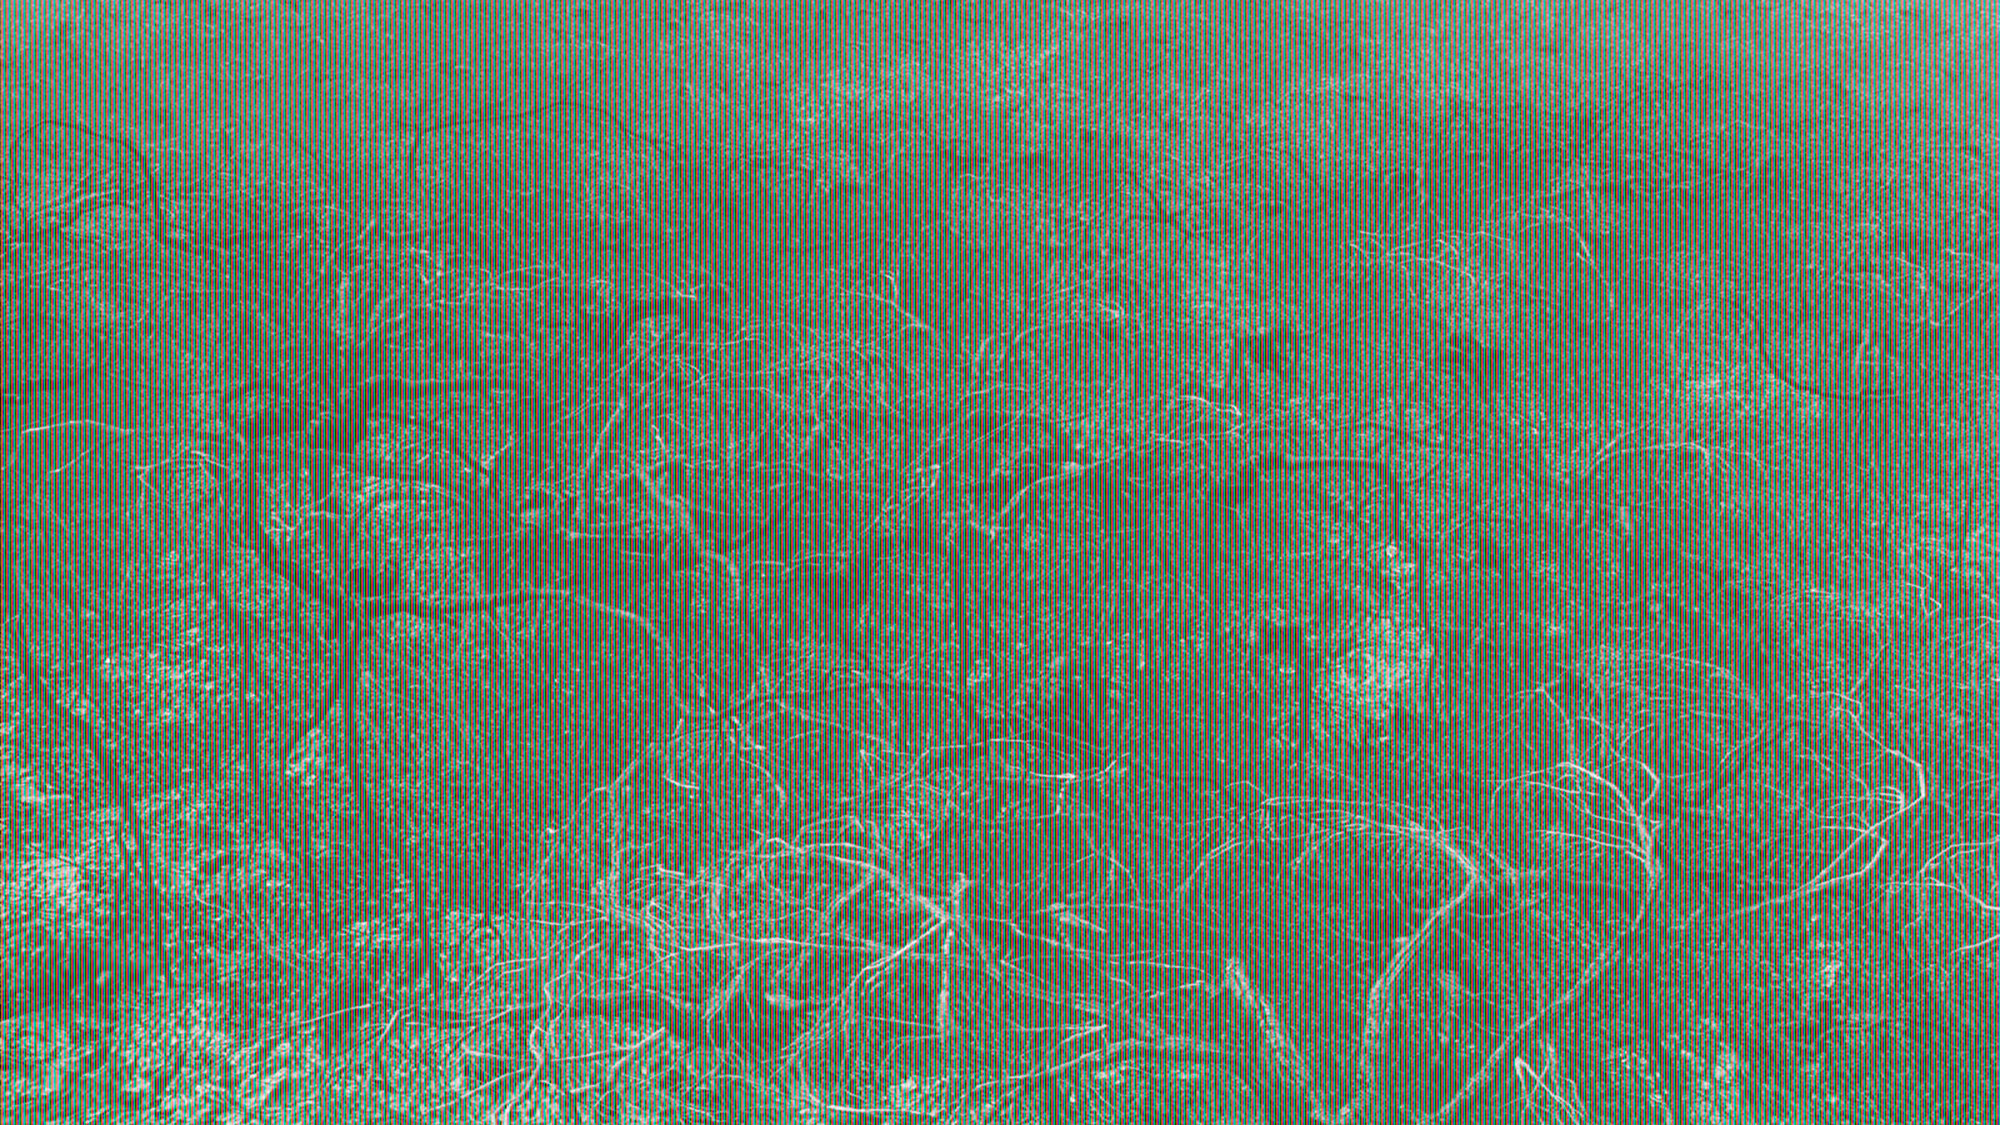 Michel Huelin, Landscape 6, 2014
Lambda Print
90 x 160 cm